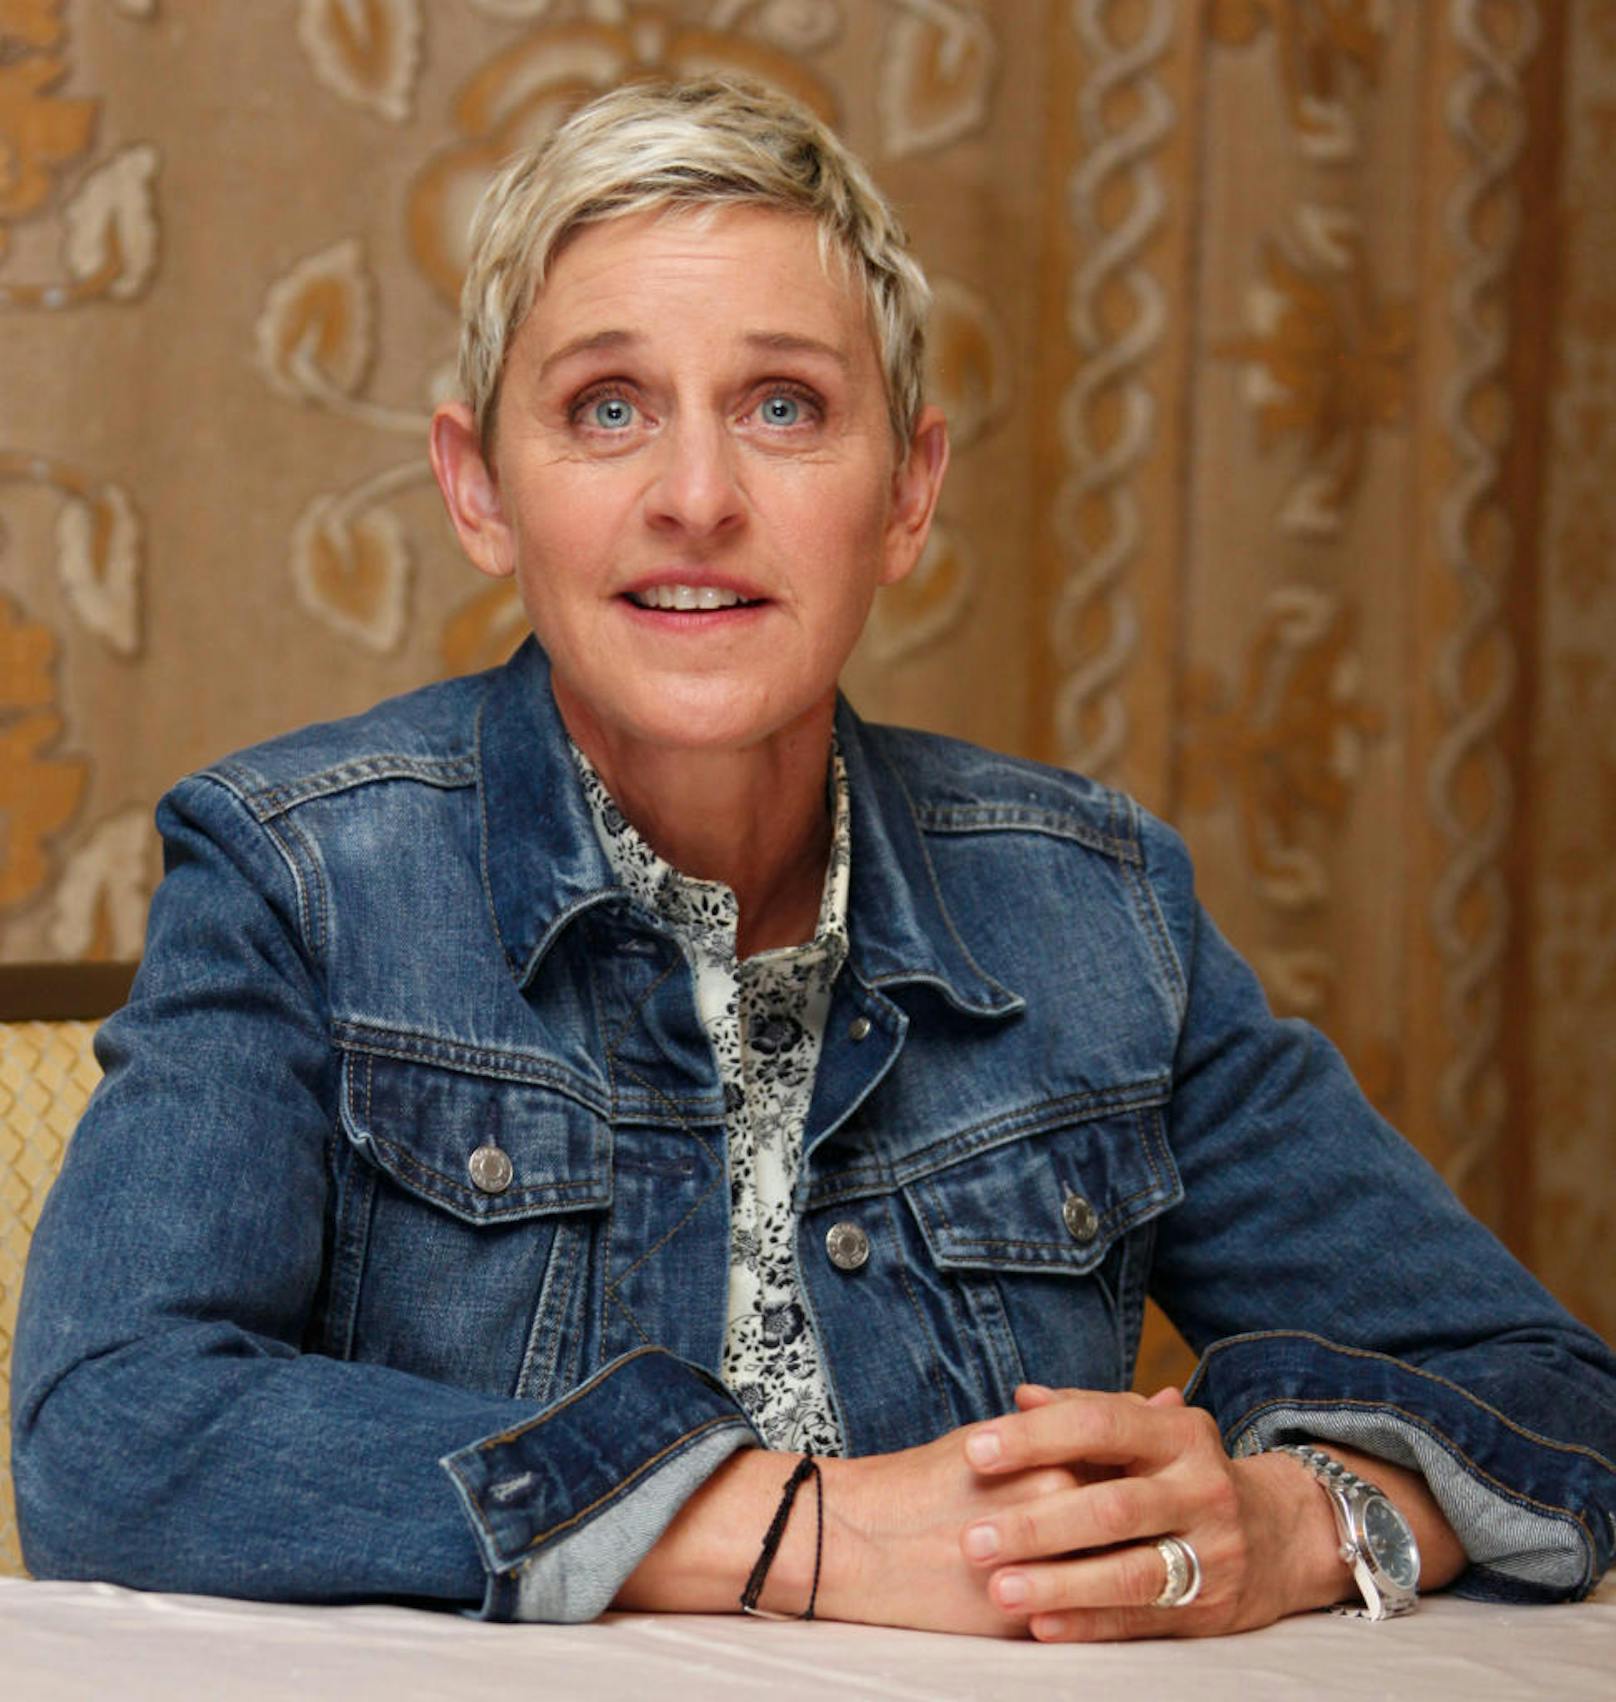 Ellen schmeißt ihre Produzenten wegen Mobbings raus